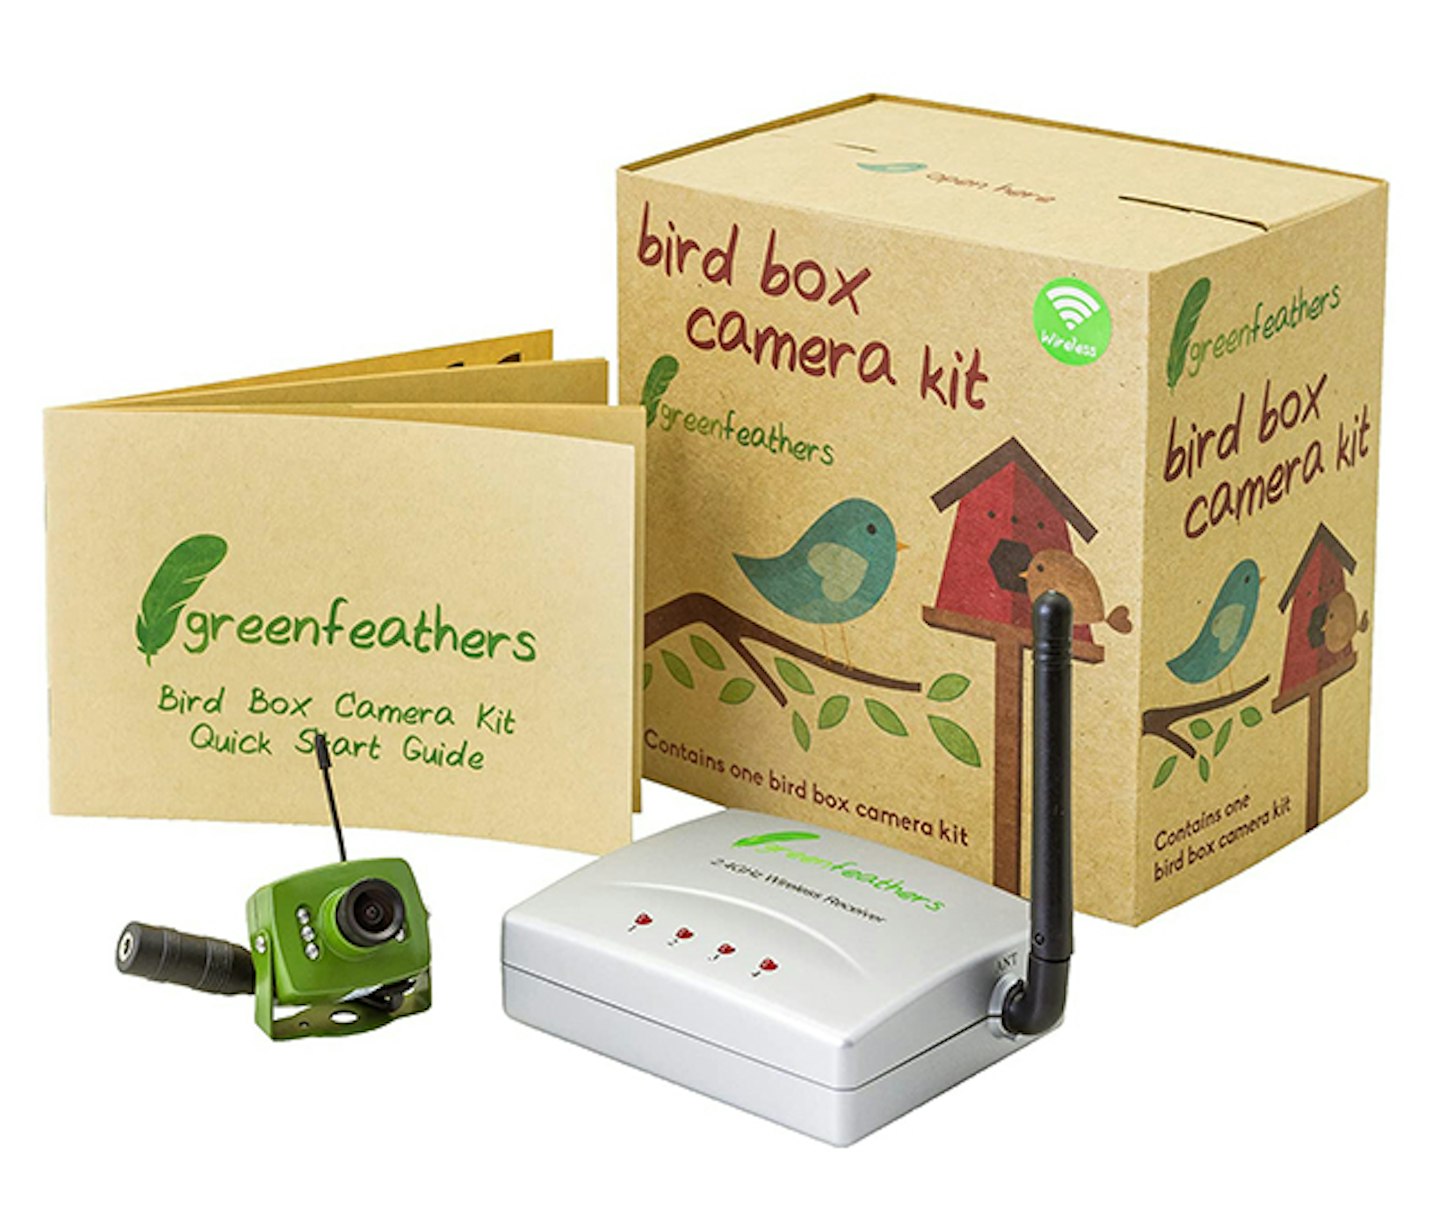 The best bird-watching gifts: Green Feathers Wireless Bird Box